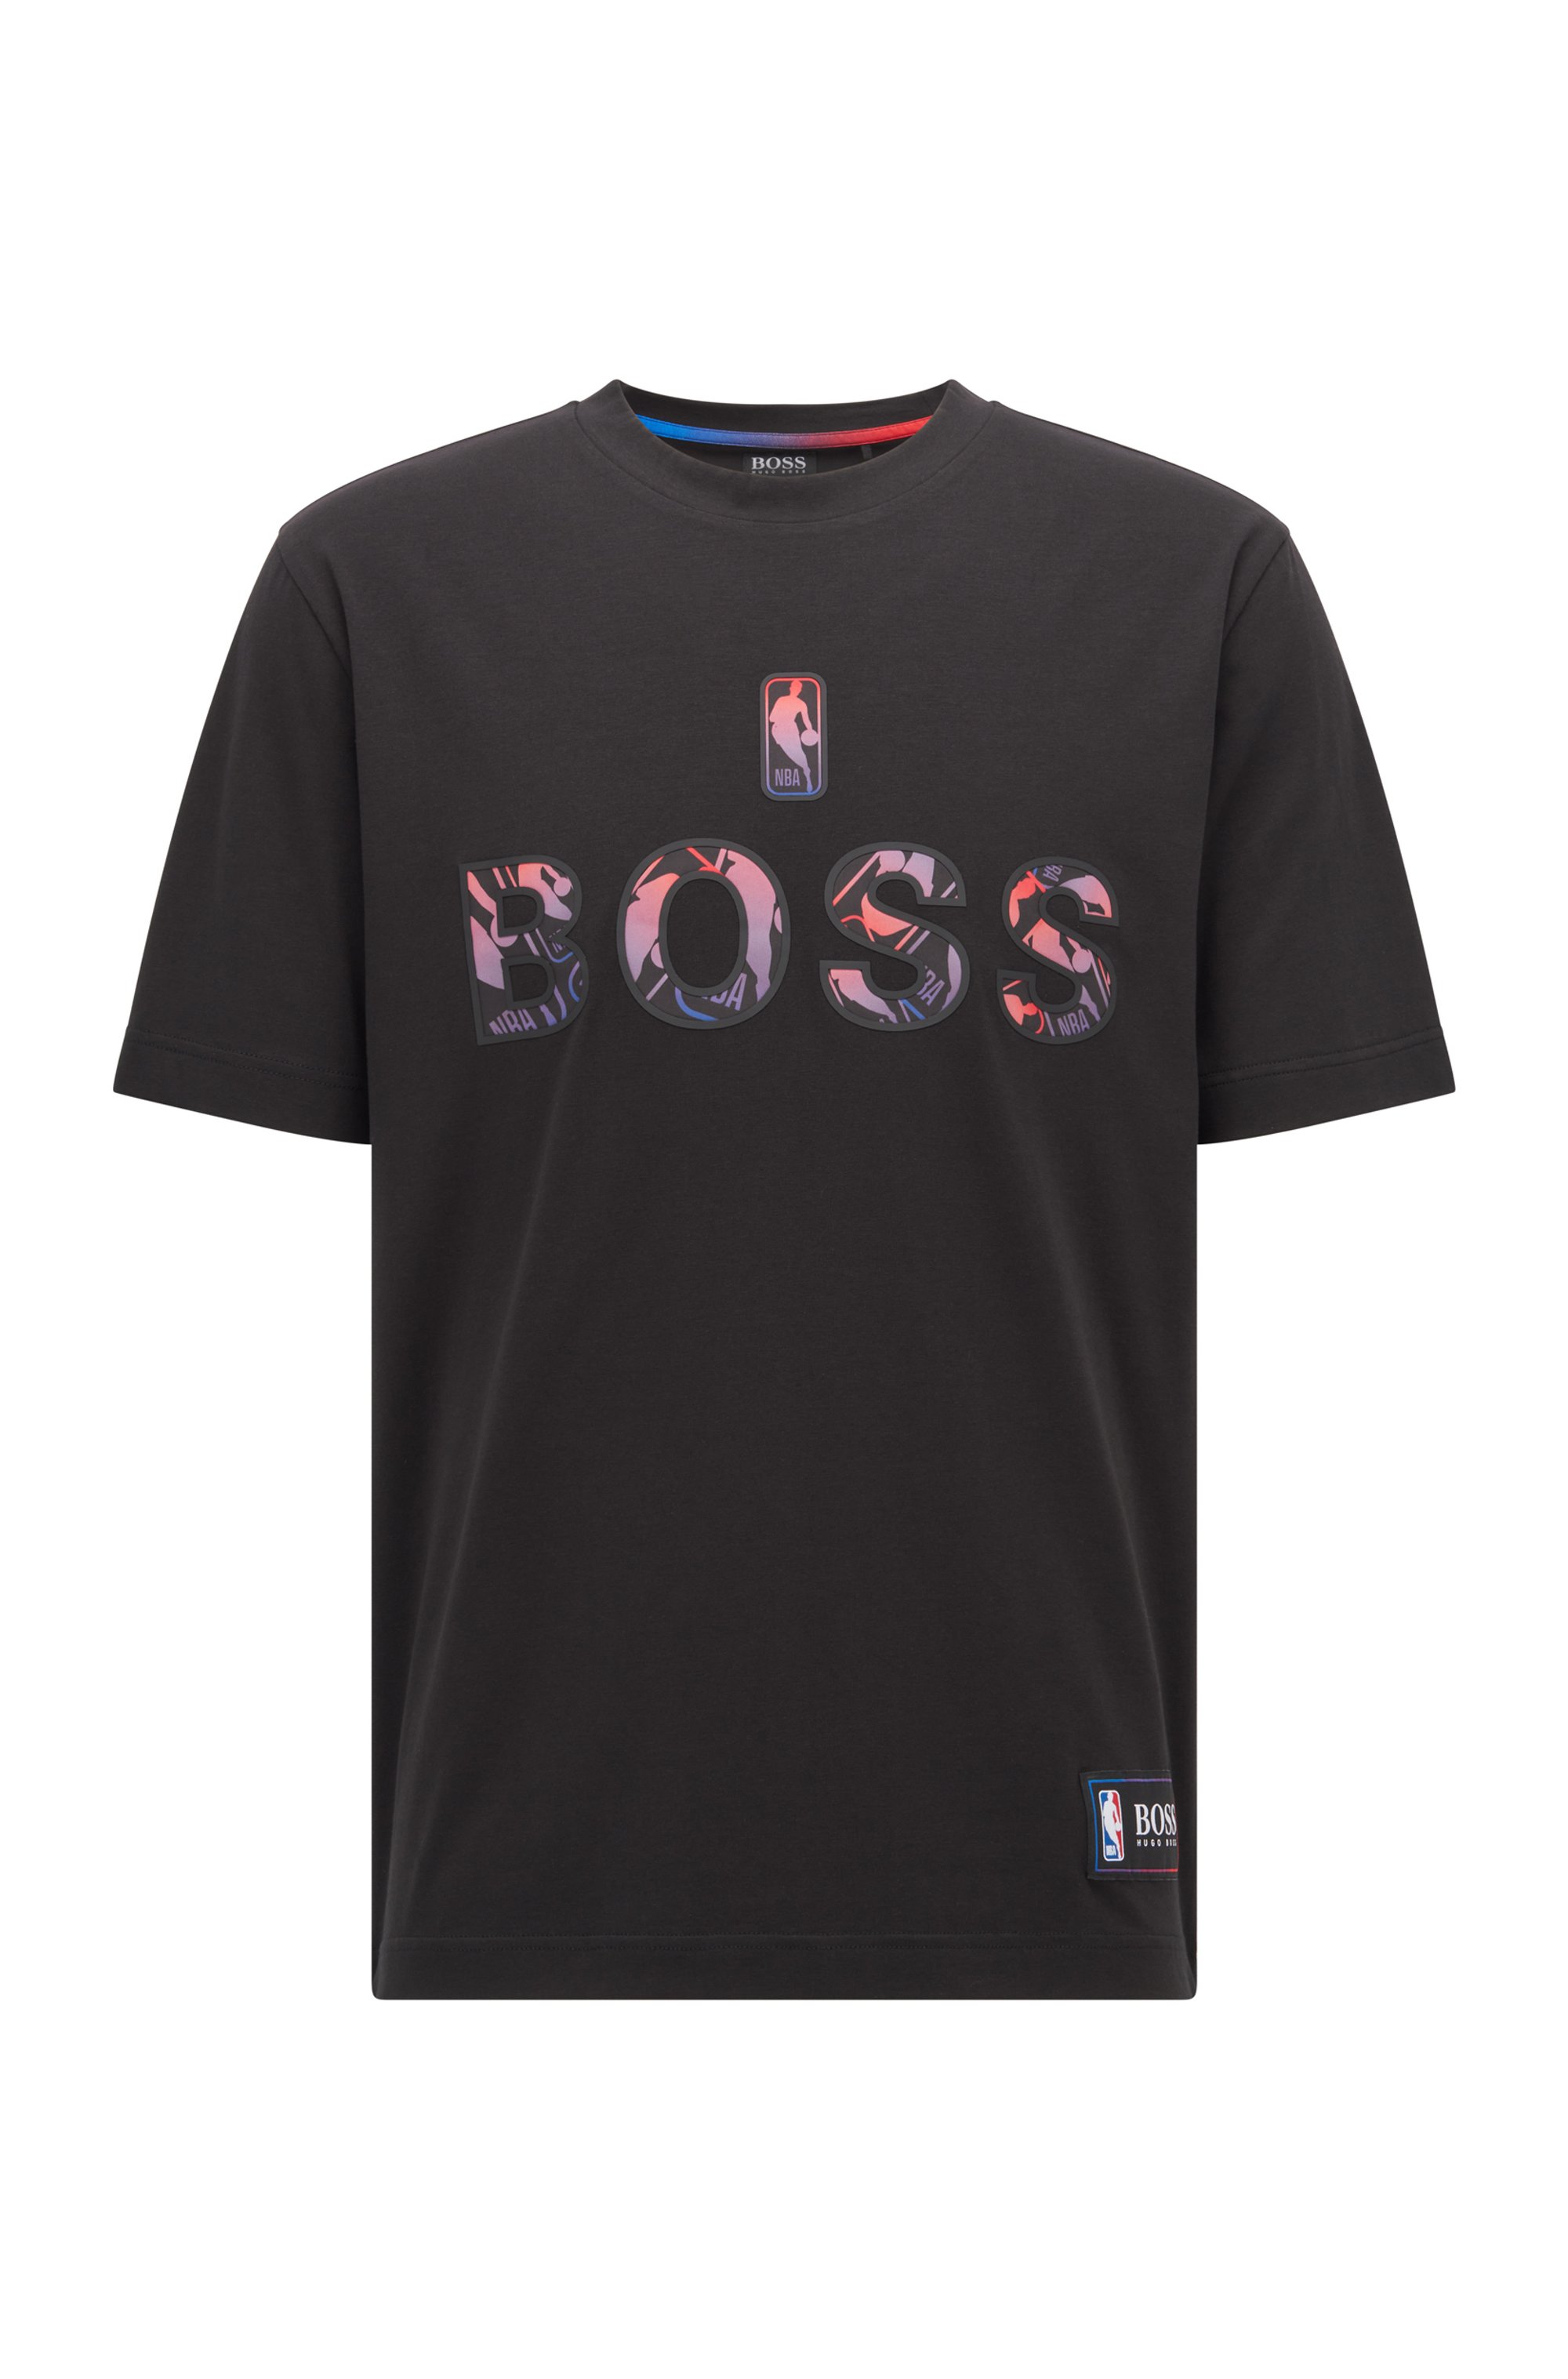 BOSS x NBA stretch-cotton T-shirt with colorful branding, NBA Generic